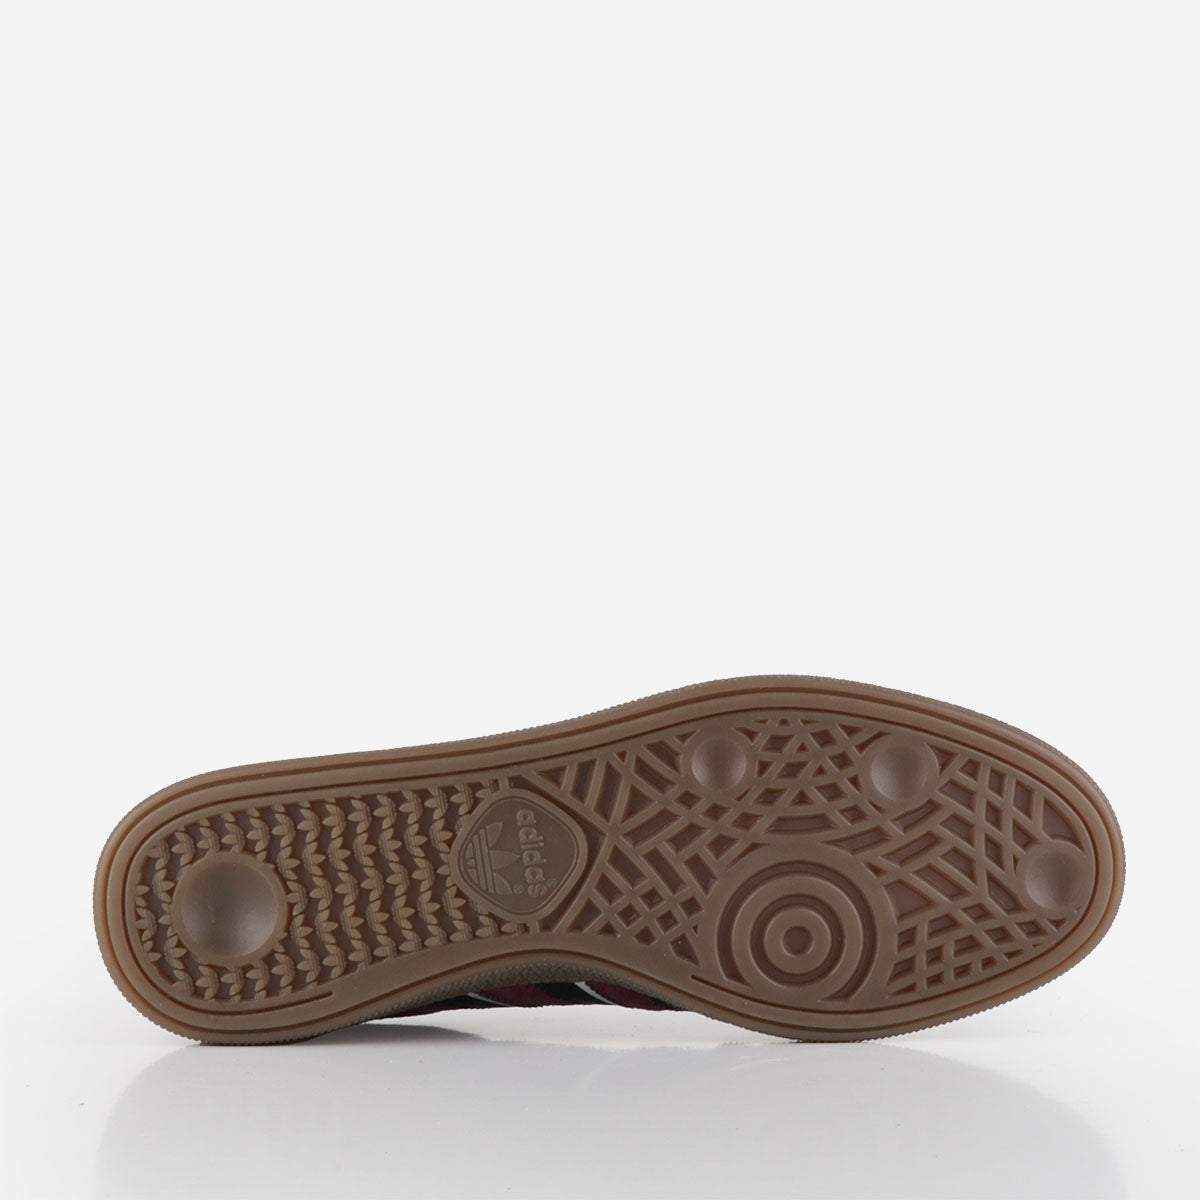 Adidas Originals Handball Spezial Shoes, Maroon Core Black Crystal White, Detail Shot 4